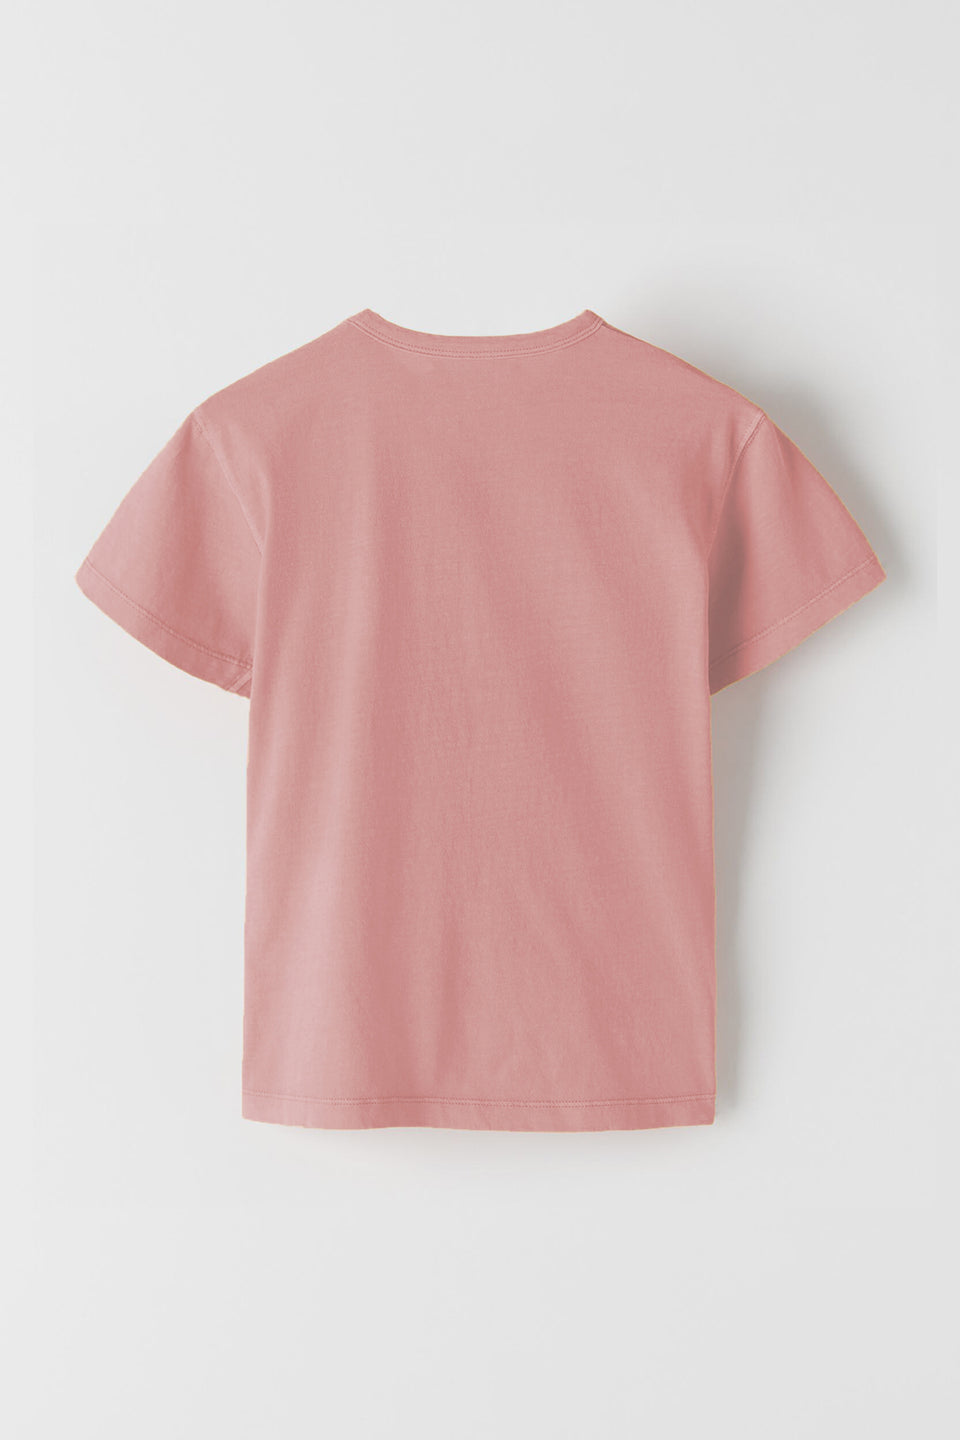 boys solid light pink round neck t-shirt